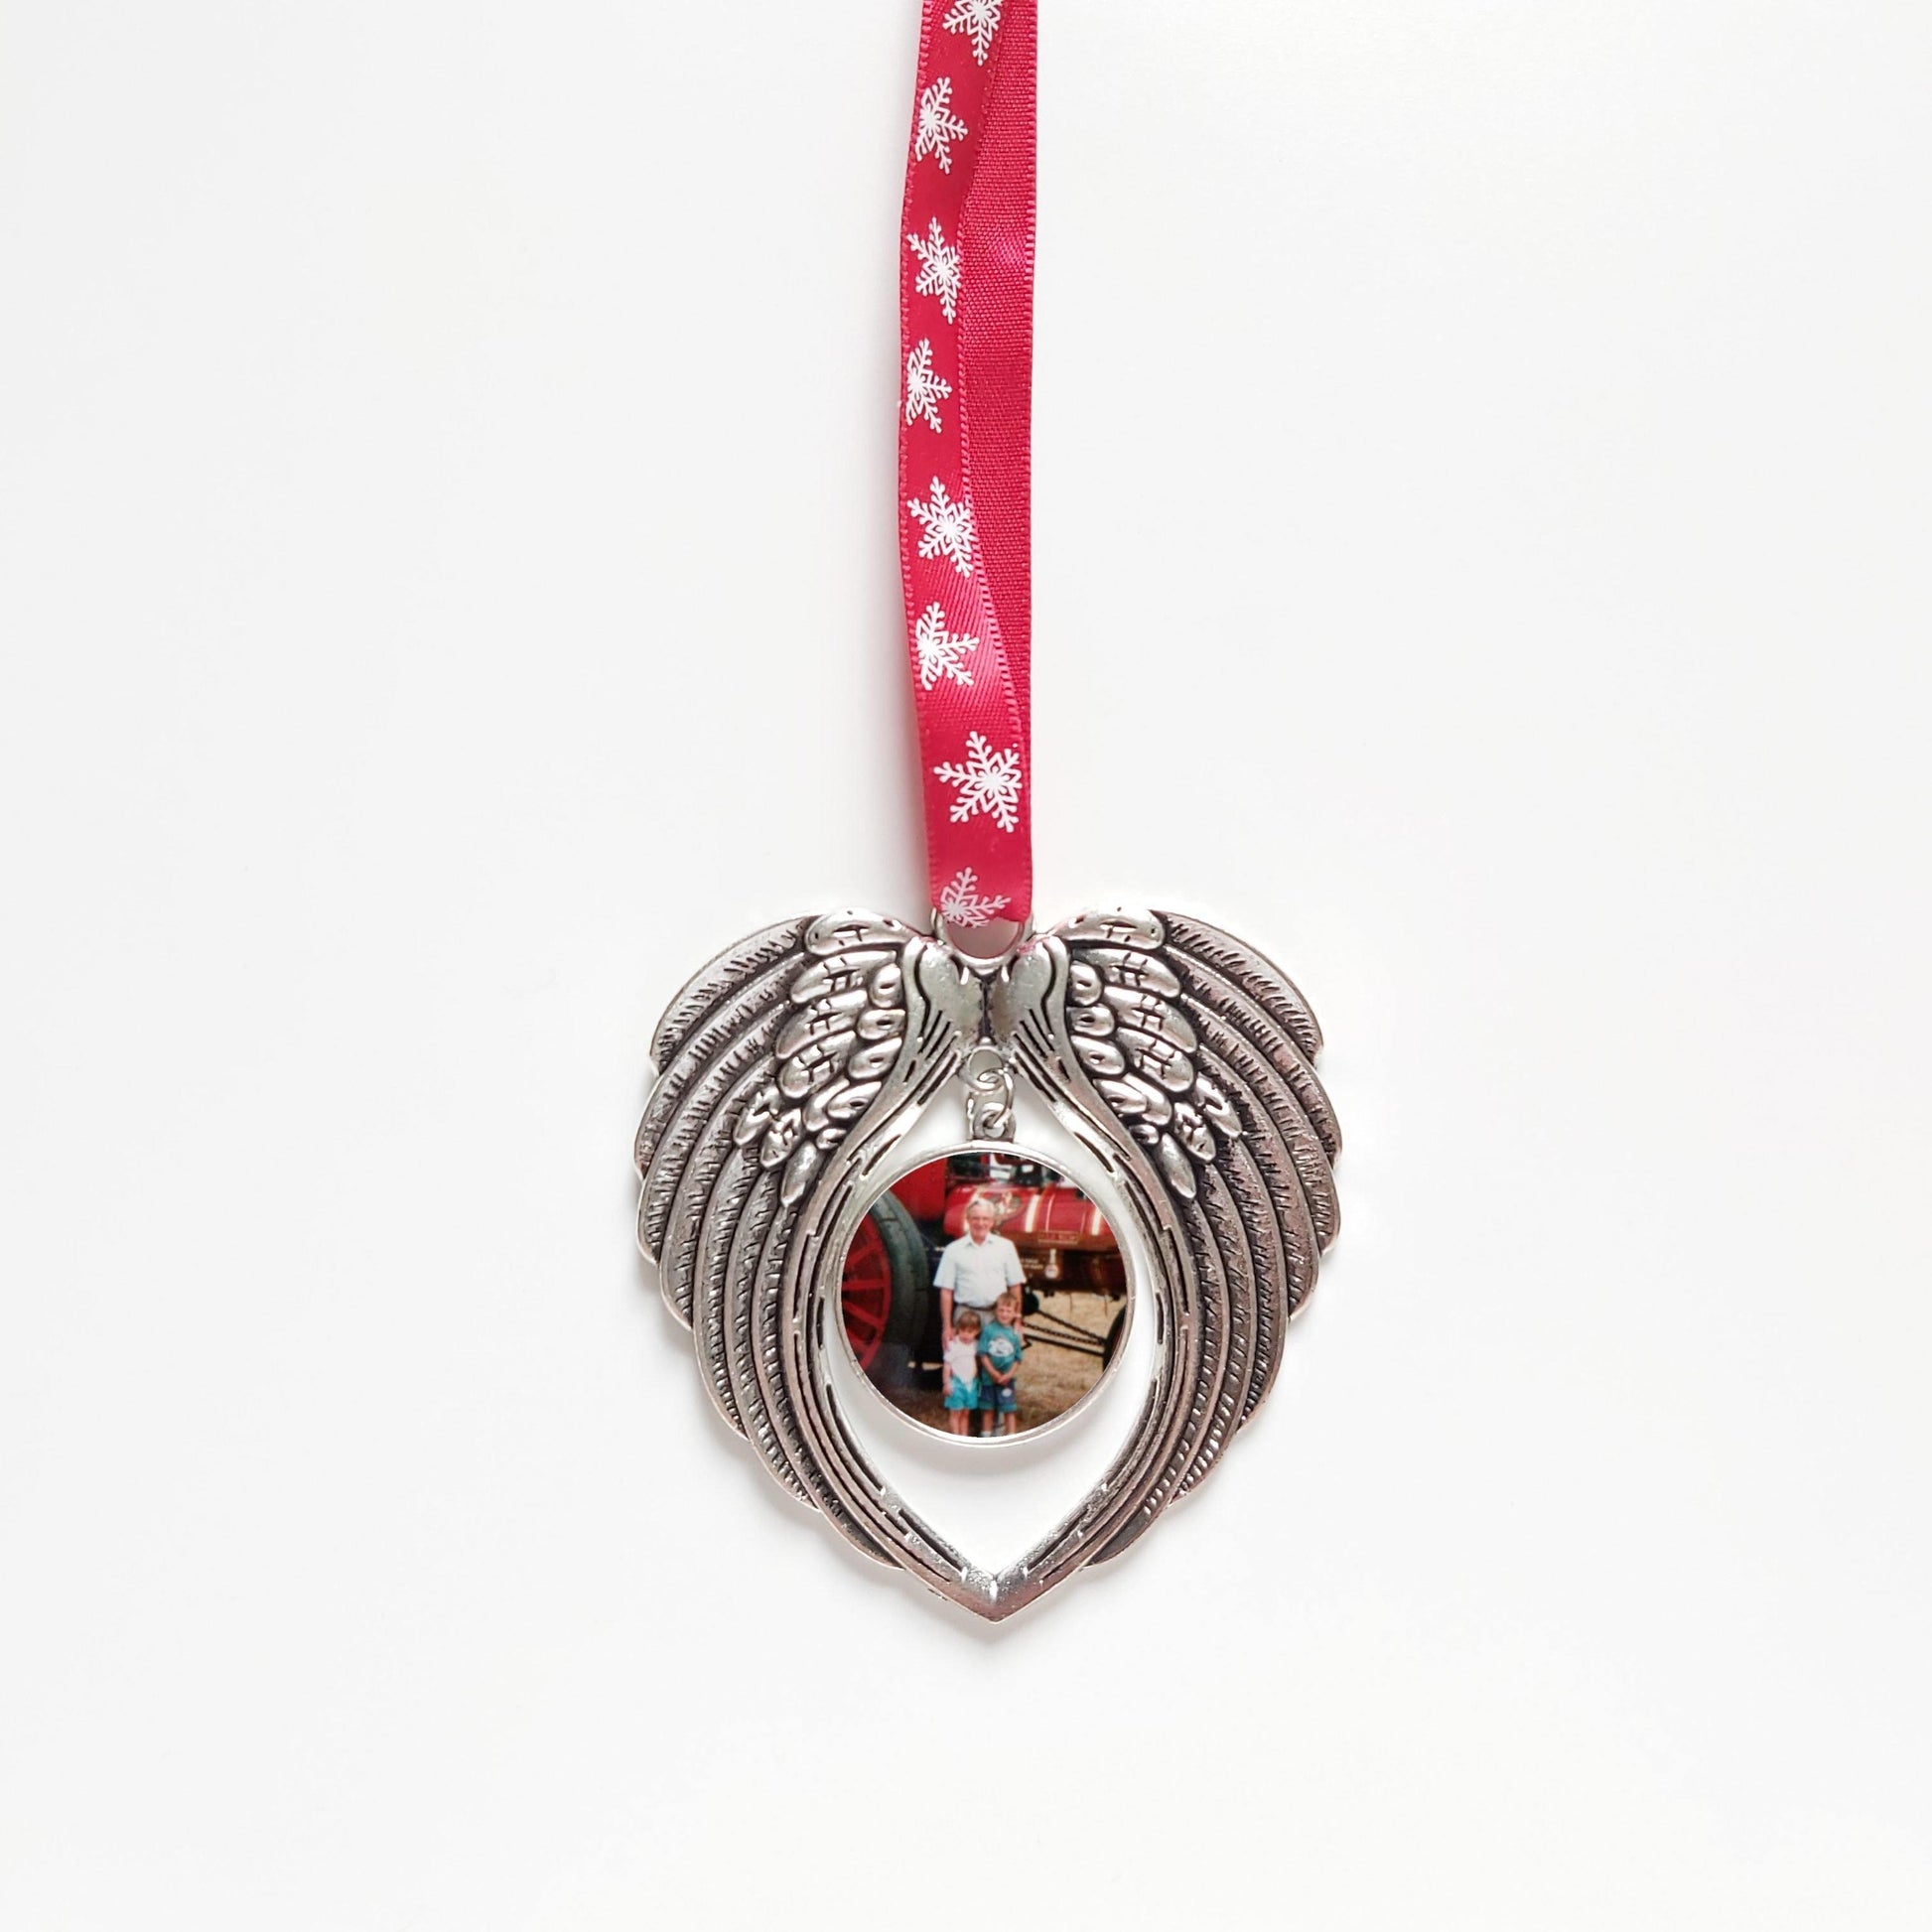 Angel wings - Personalised Christmas Decorations - Moose and Goose Gifts - photo gift - handmade keepsake